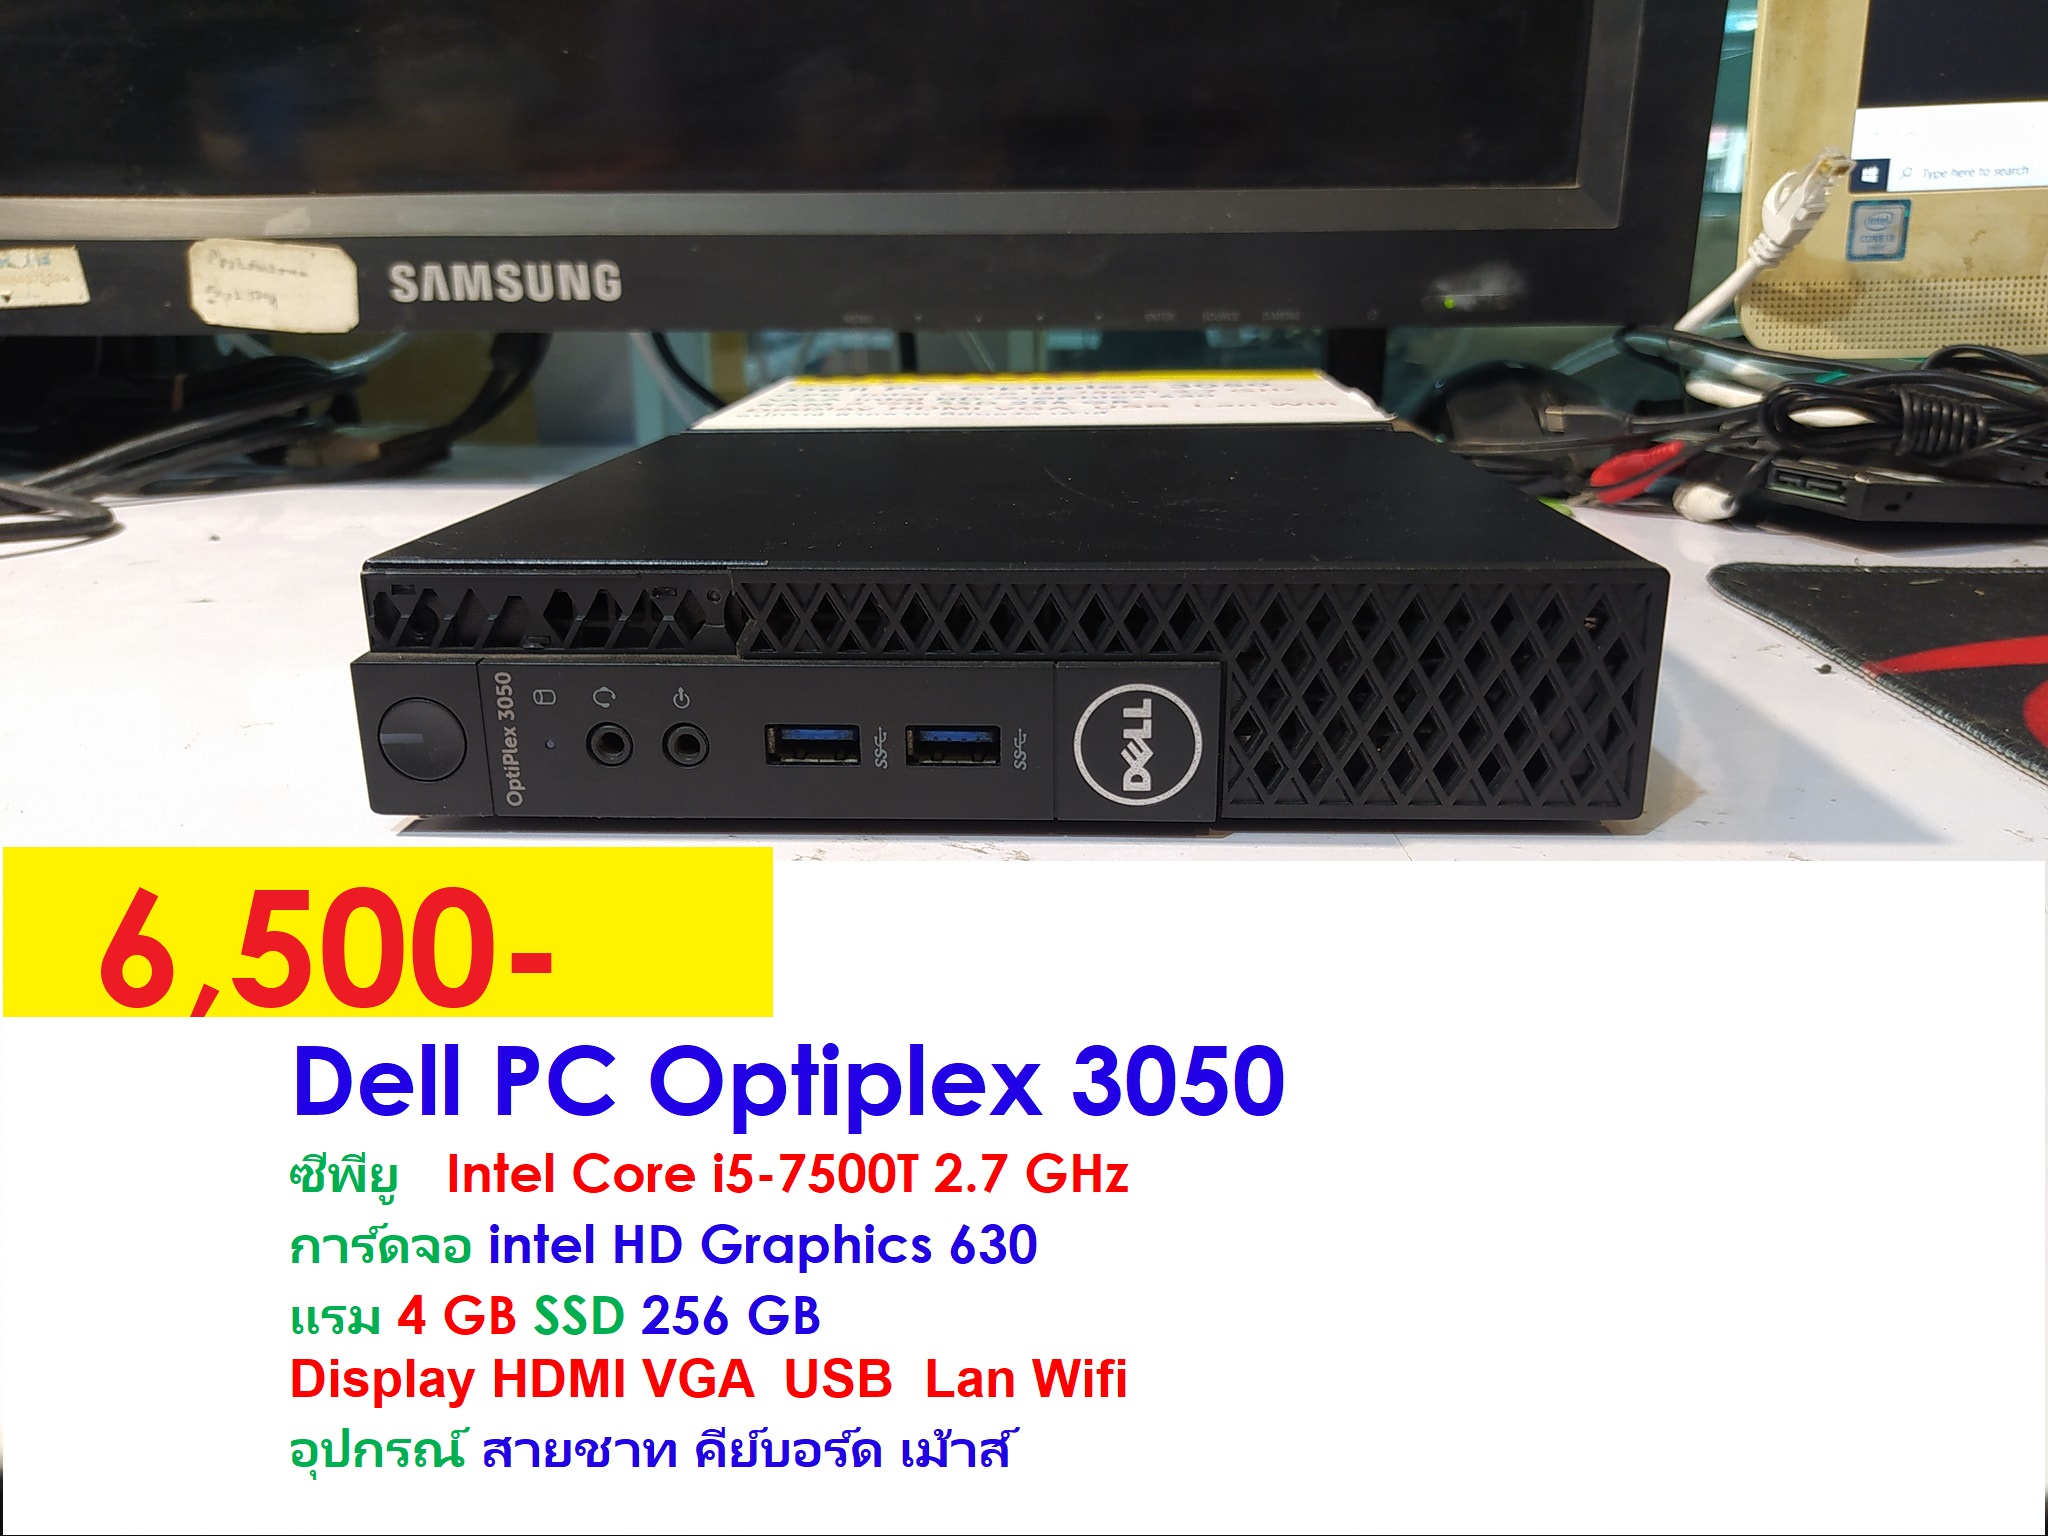 Dell PC Optiplex 3050  ซีพียู Intel Core i5-7500T 2.7 GHz  การ์ดจอ intel HD Graphics 630  แรม 4 GB   SSD 256 GB  Display HDMI VGA  USB  Lan Wifi  อุปกรณ์ สายชาท คีย์บอร์ด เม้าส์  ประกันตัวเครื่อง 3 เดือน  ดูเเลหลังการขายตลอดอายุเครื่อง  วีดีโอ รีวิว ตามลิ้งค์ด้านล่างนี้เลยครับ  ราคาที่  6,500 บาท เก็บปลายทางโอนมัดจำ 500 บาท  ธ.กสิกรไทย 155-235-062-2 จักรินทร์ มากมี ------------------------------------ Face : หมาก มากมี โทร : 0872078533 Line : mark0872078533 ร้าน : ไอที อิเล็กทรอนิกส์ 2 160/70 ถ.เติบศิริ ต.อุทัยใหม่ อ เมือง จ อุทัยธานี 61000 รูปที่ 1